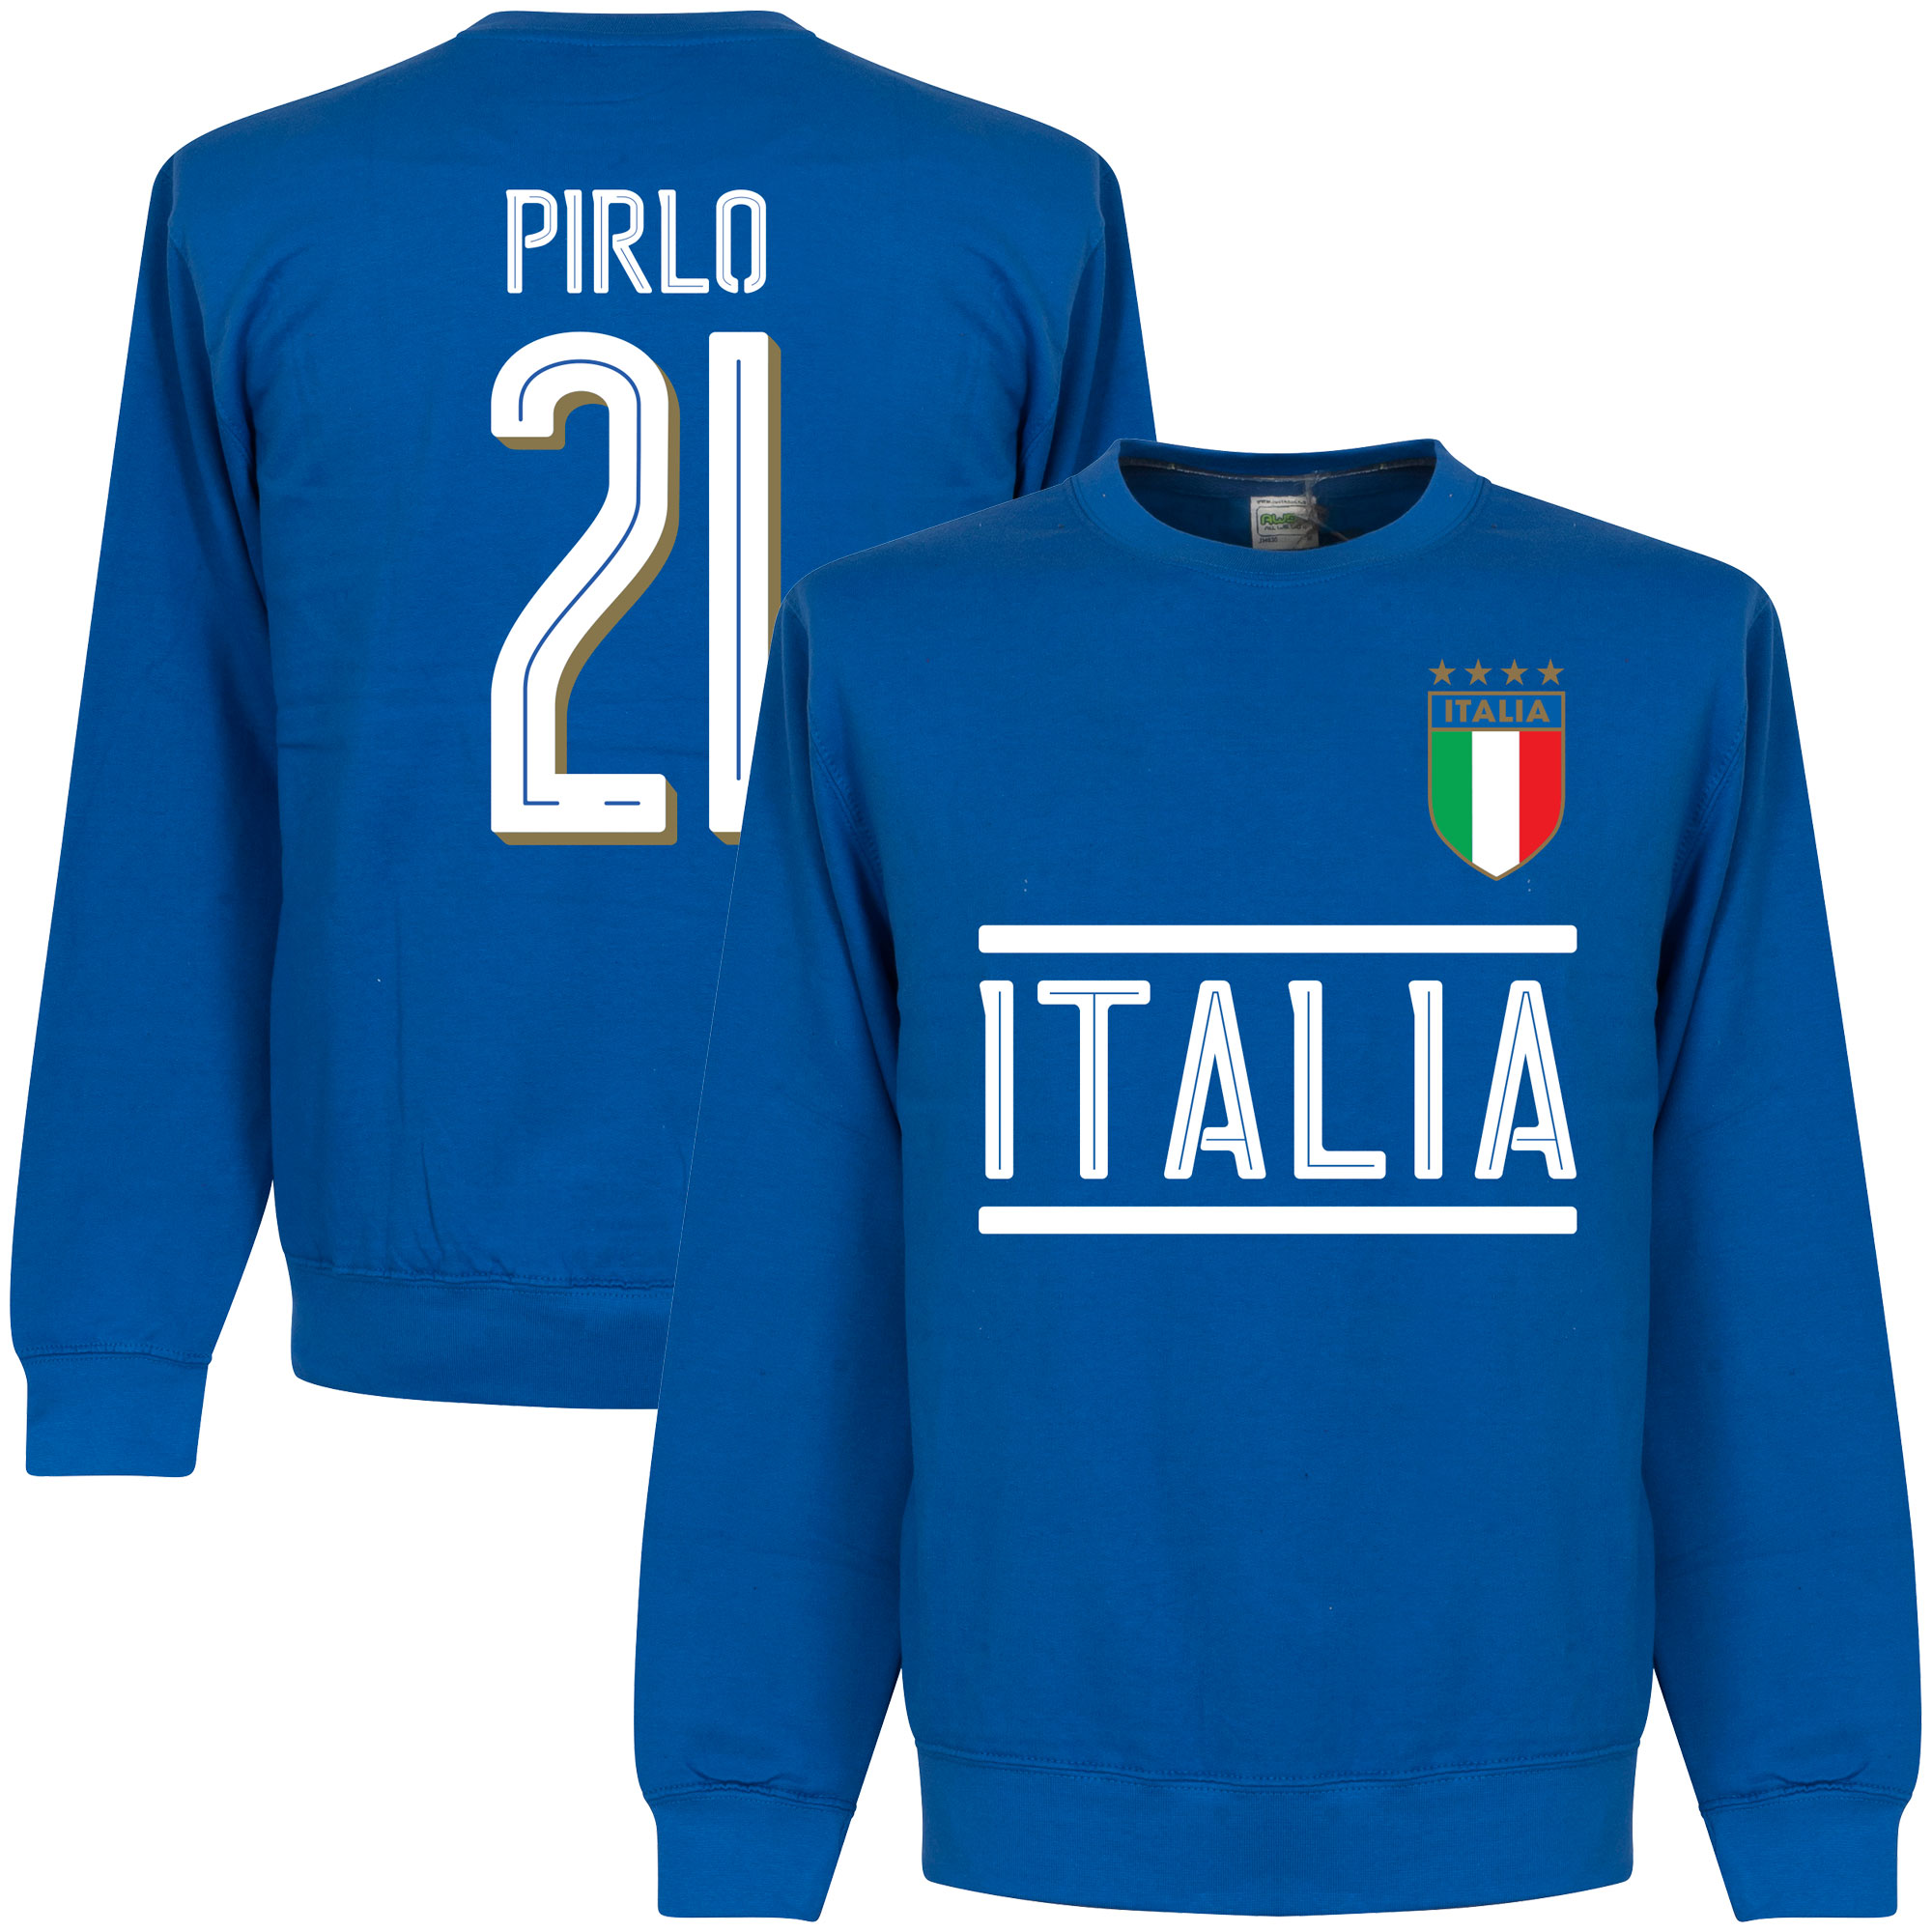 Italië Pirlo 21 Team Sweater - Blauw - M